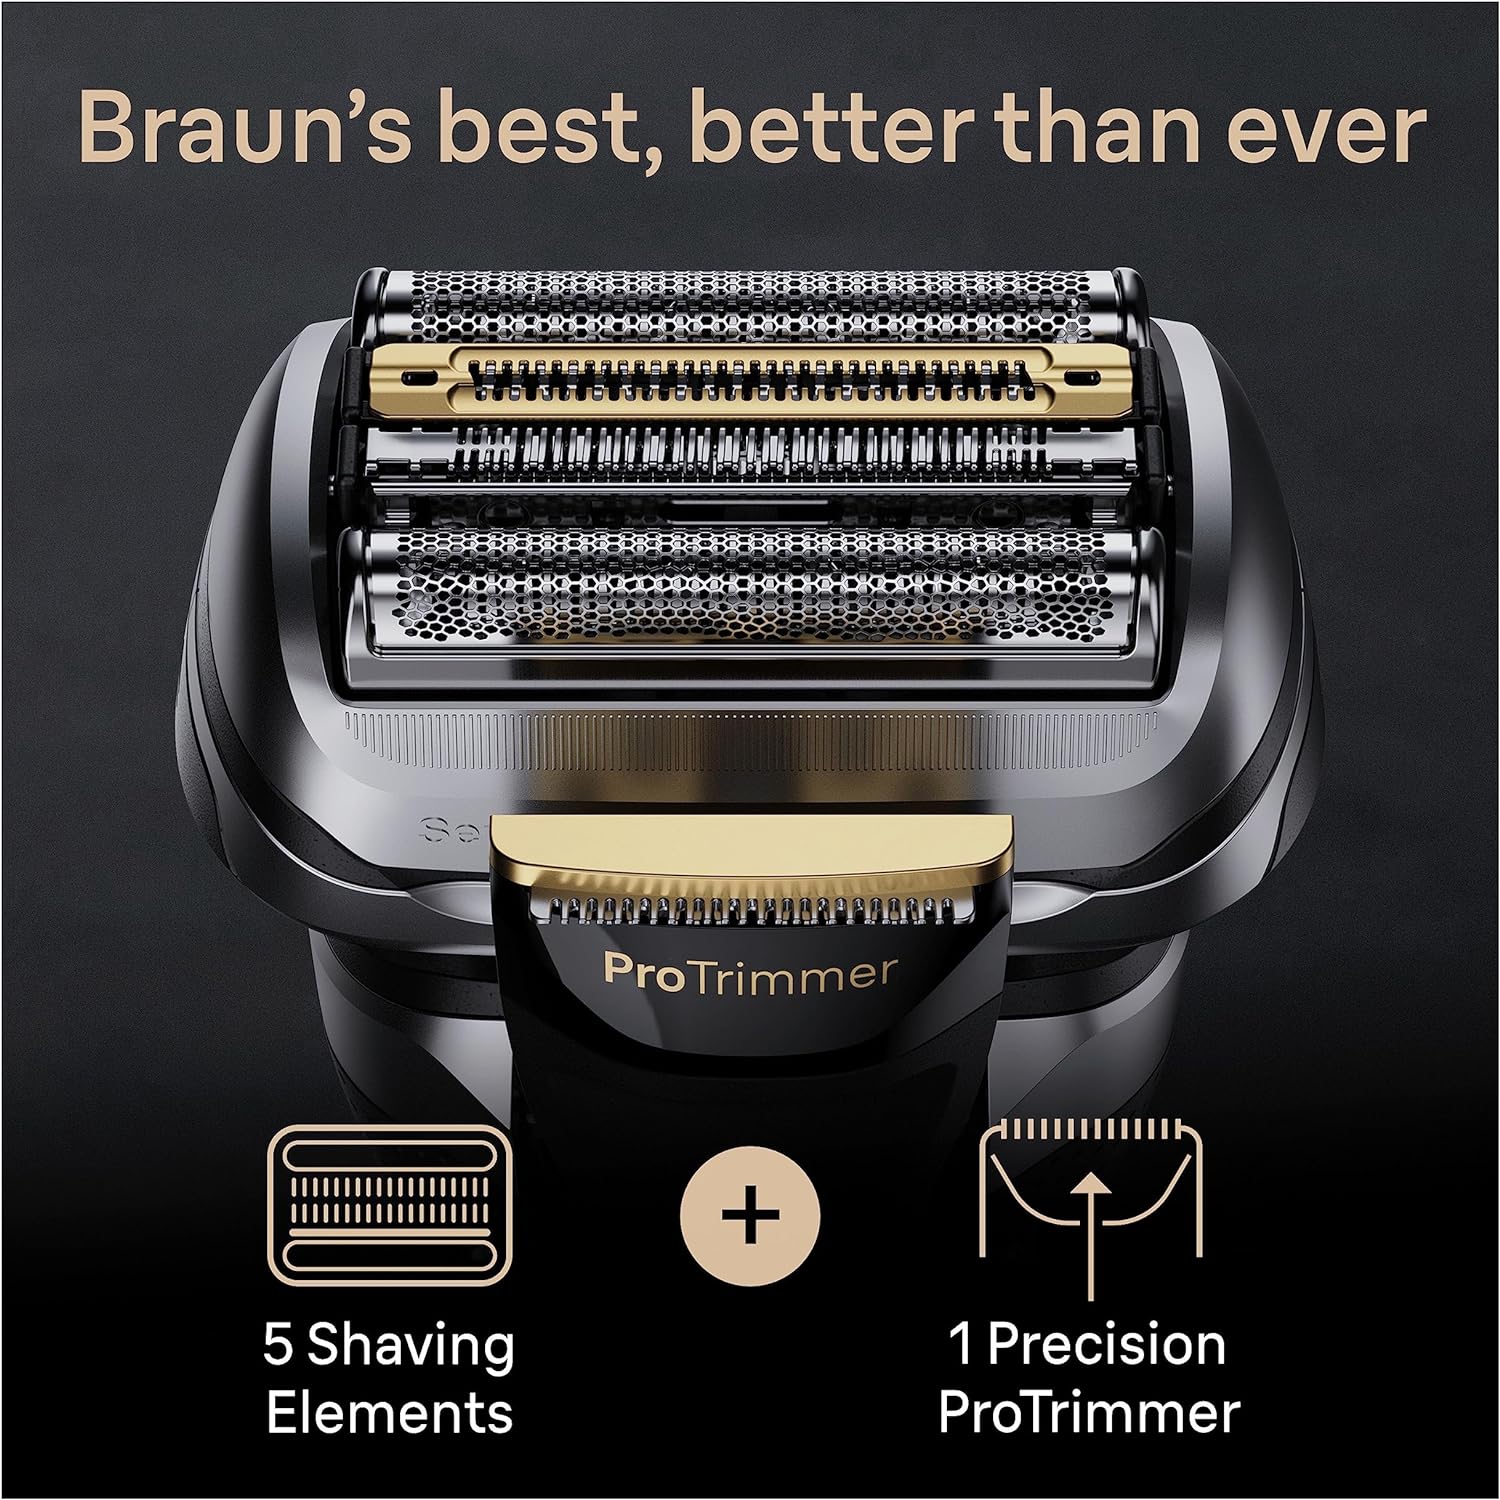 Braun Series 9 Pro 9467cc Electric Shaver